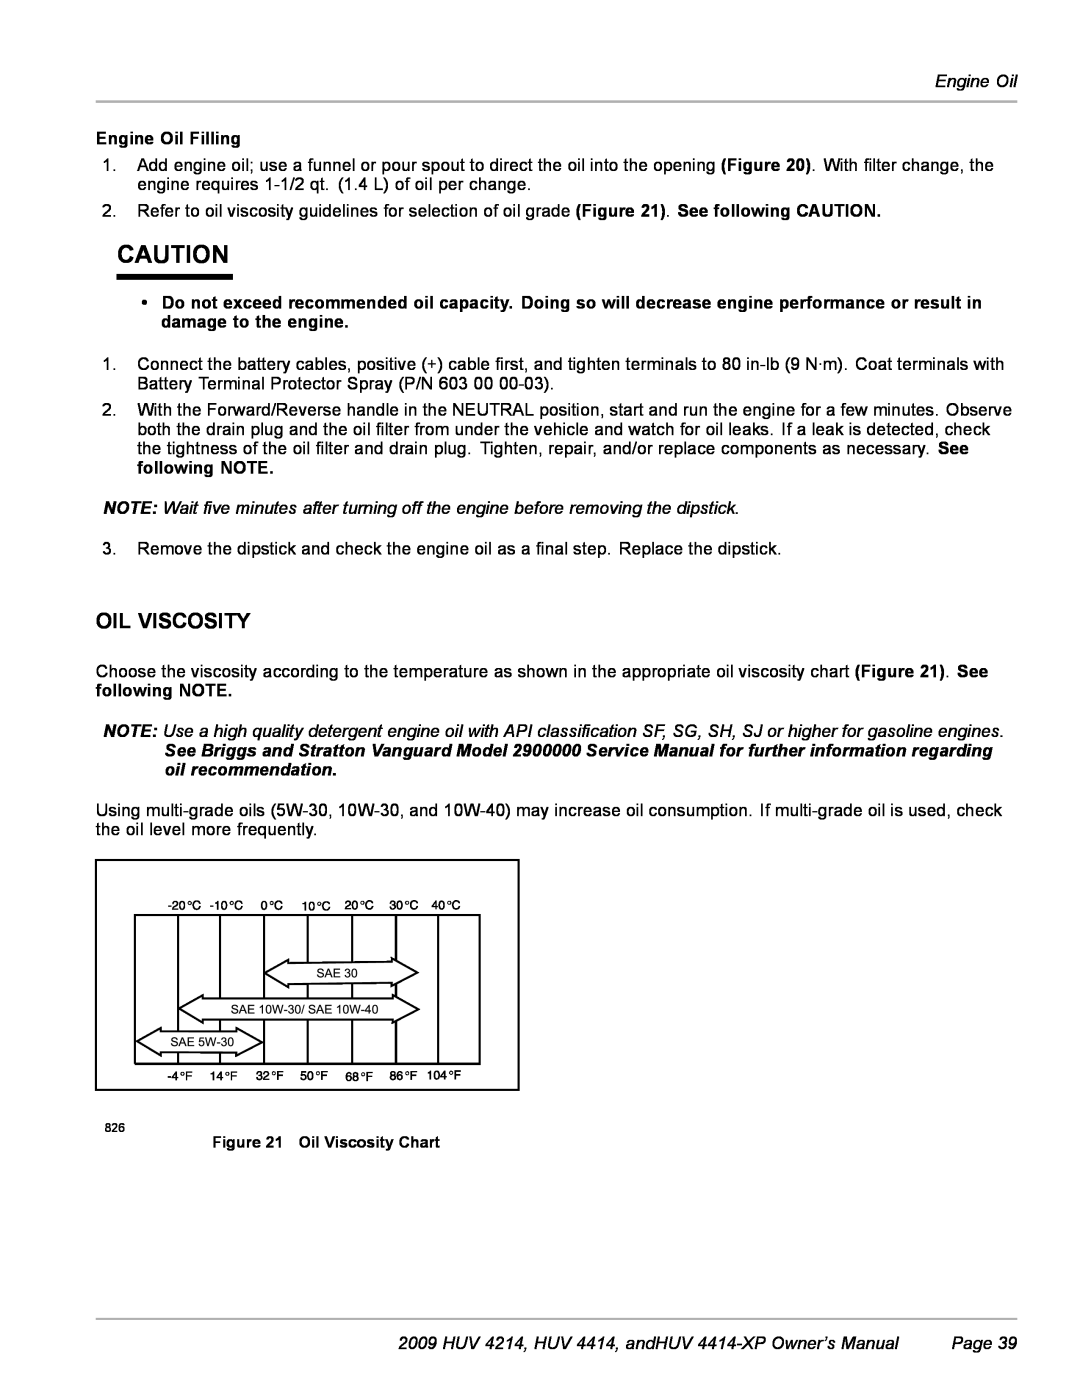 Husqvarna owner manual Engine Oil, HUV 4214, HUV 4414, andHUV 4414-XP Owner’s Manual, Page, Oil Viscosity Chart 